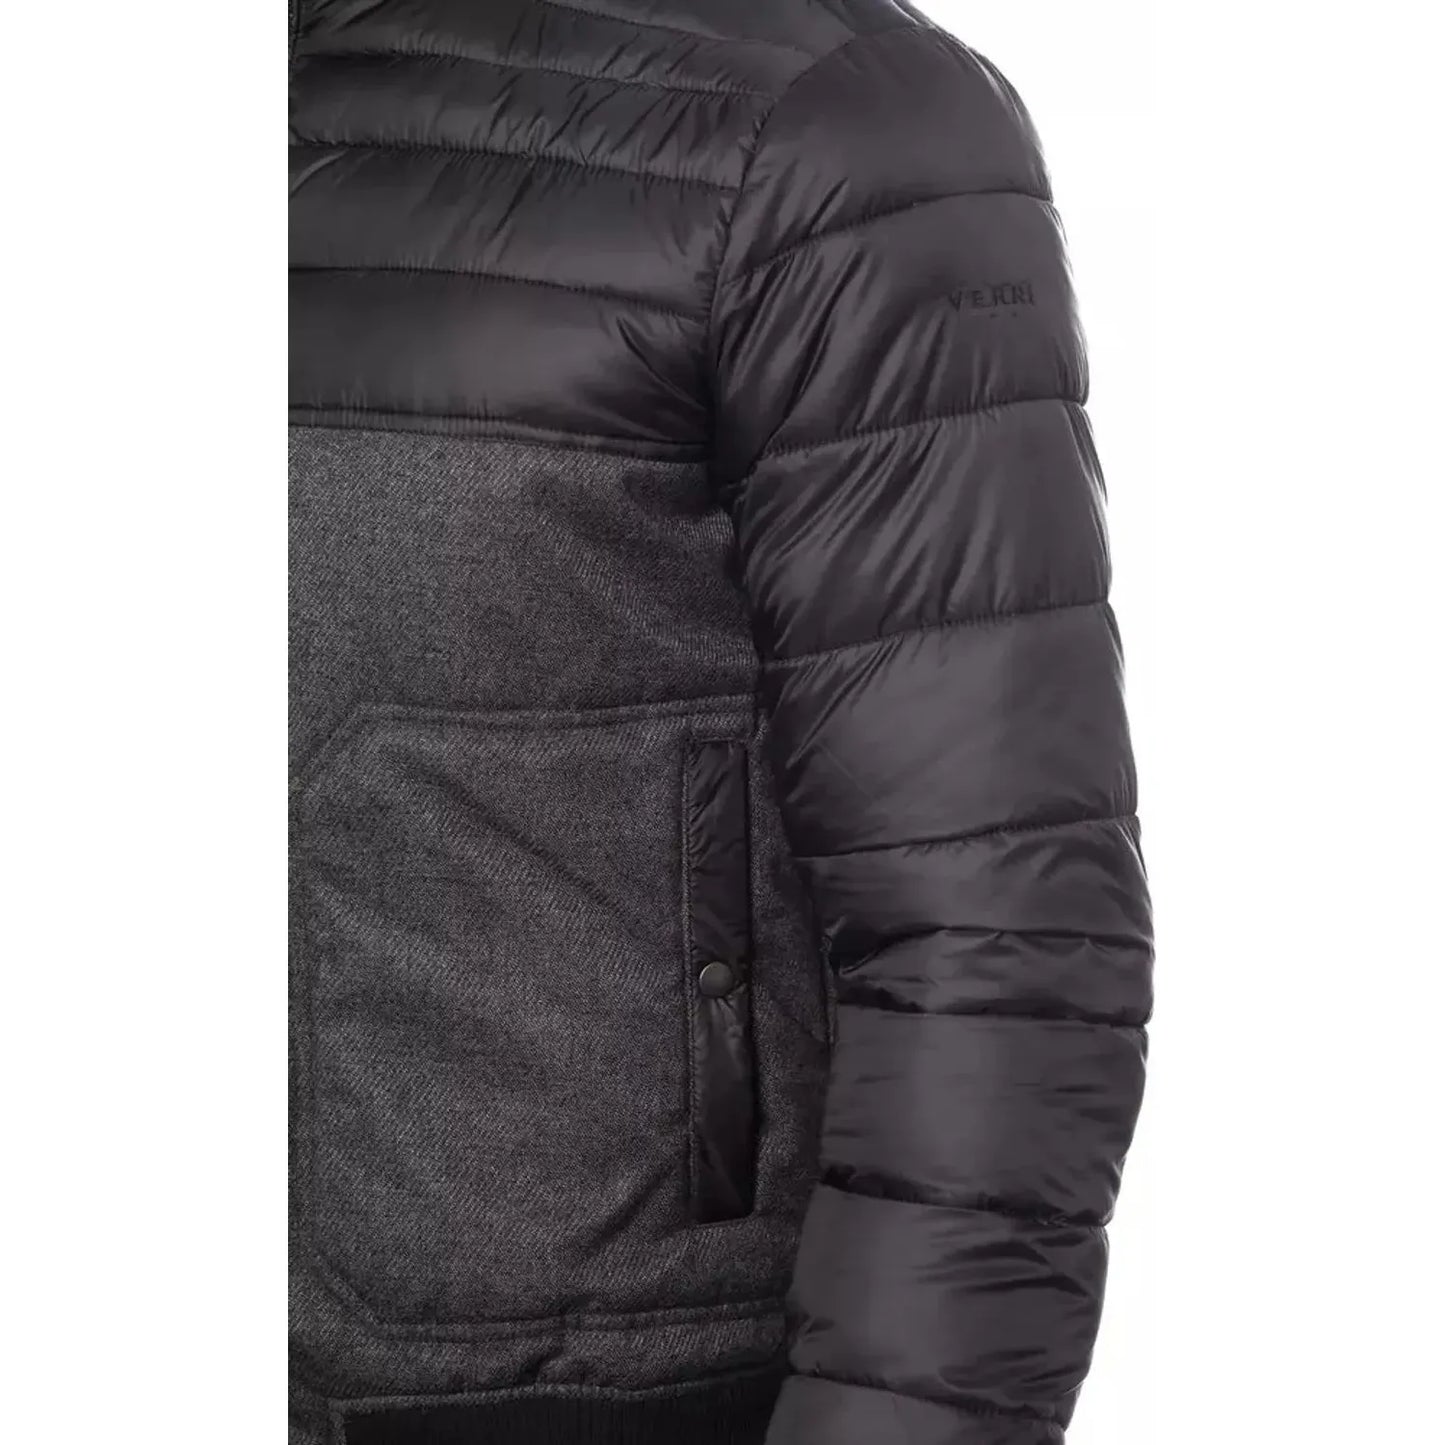 Verri Sleek Gray Bomber Jacket for Men Coats & Jackets vgrigio-jacket